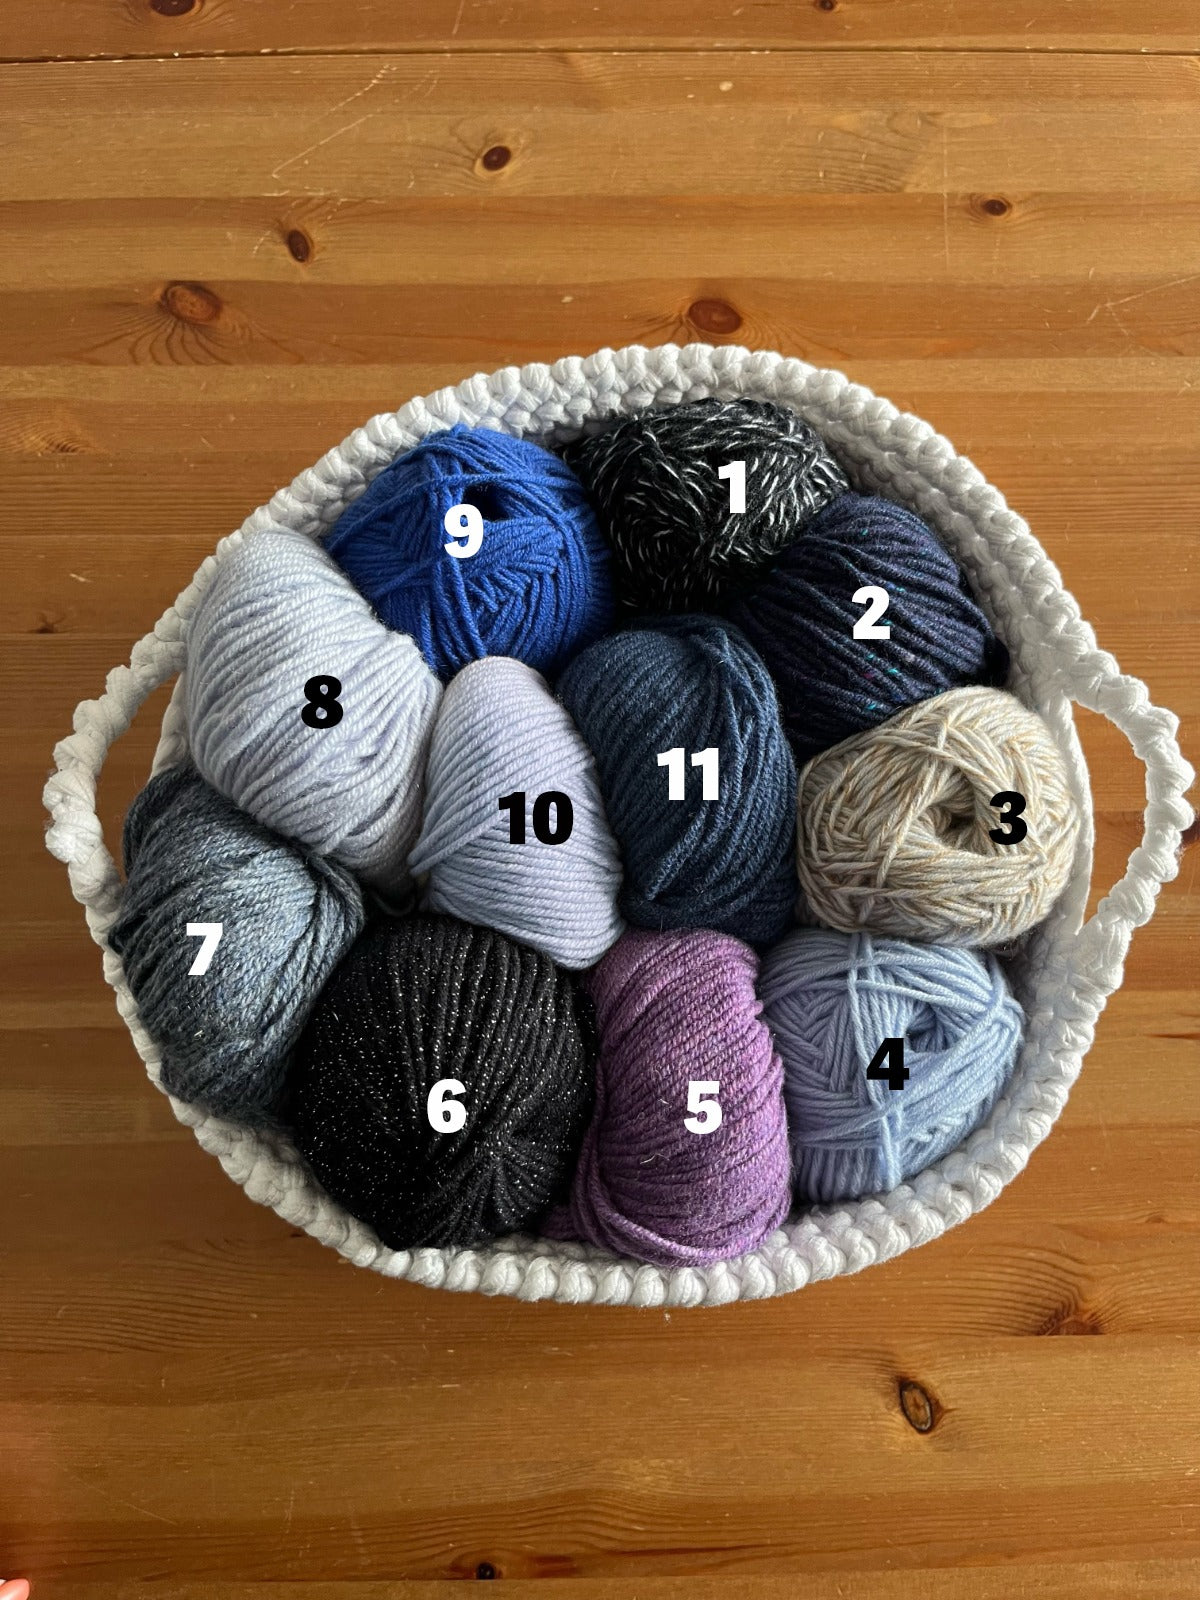 Coppelia Hat Knit Kit